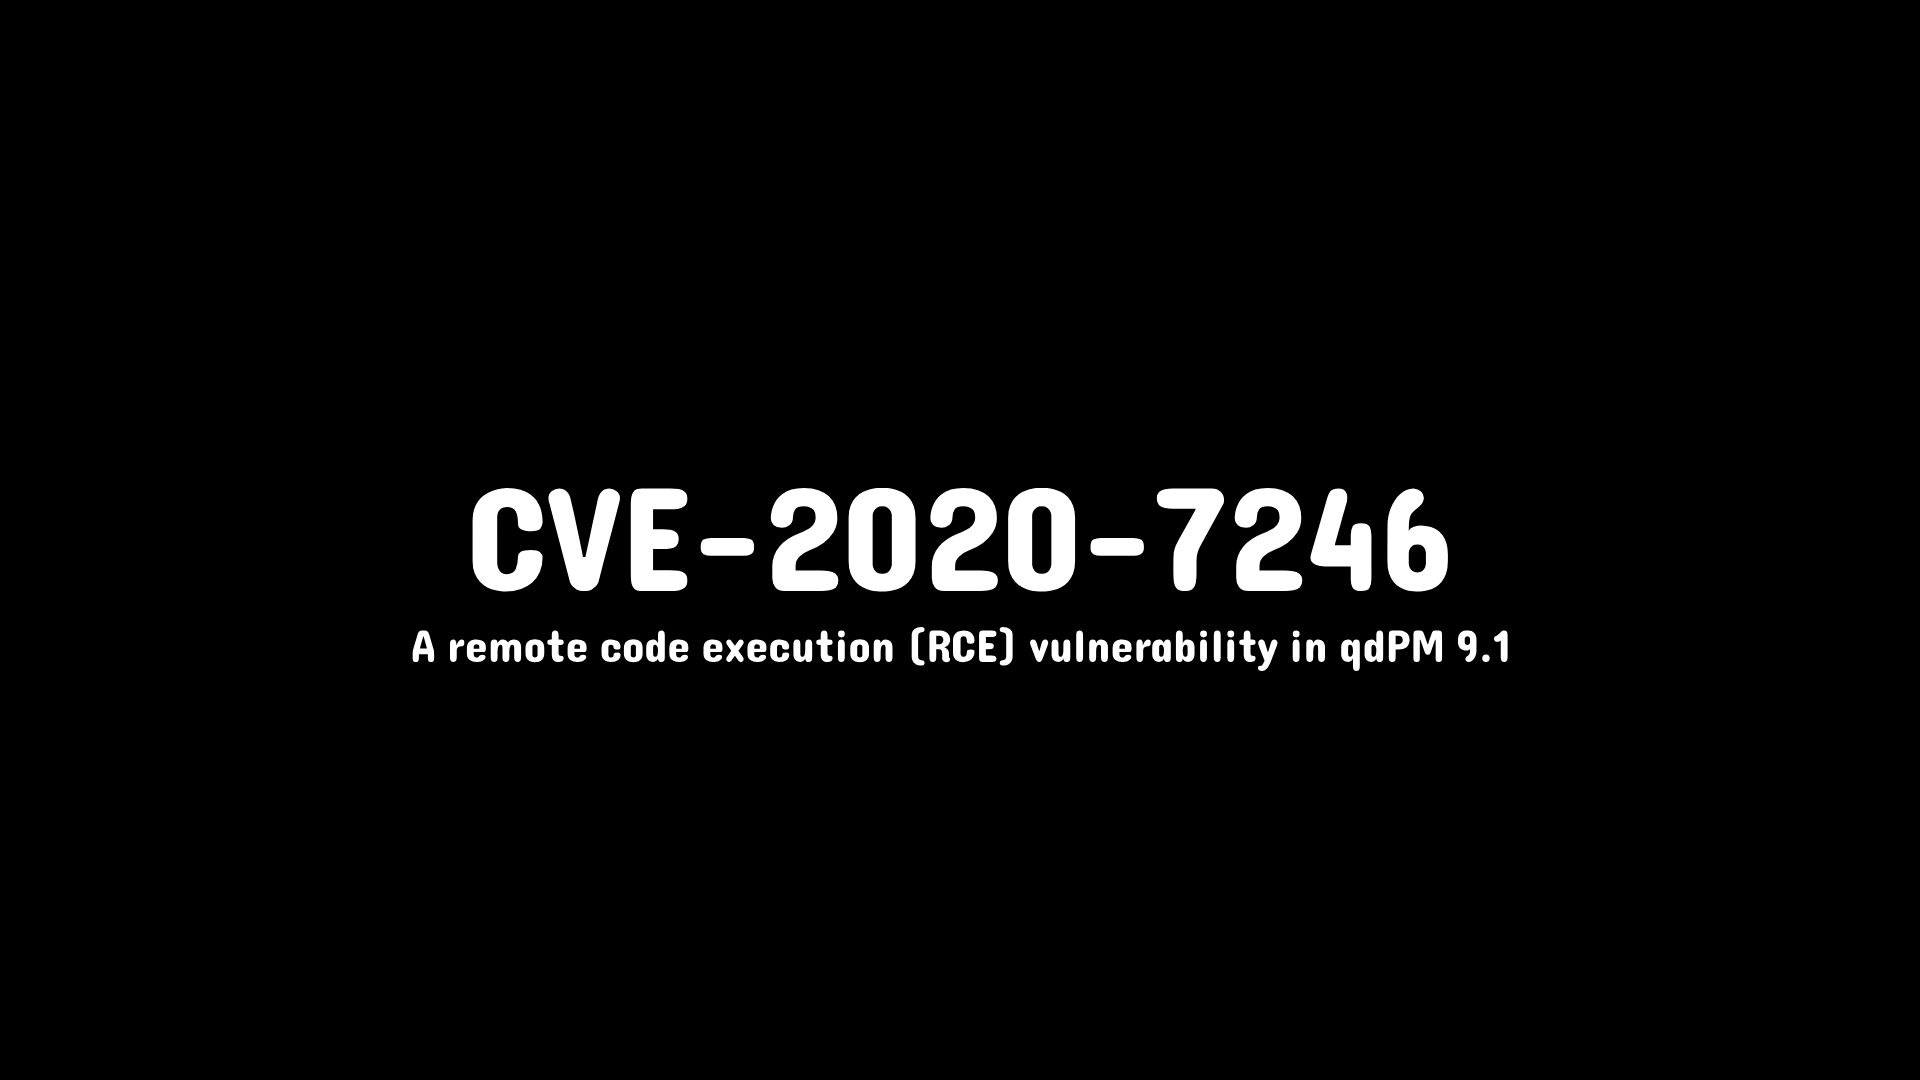 CVE-2020-7246: A remote code execution (RCE) vulnerability in qdPM 9.1